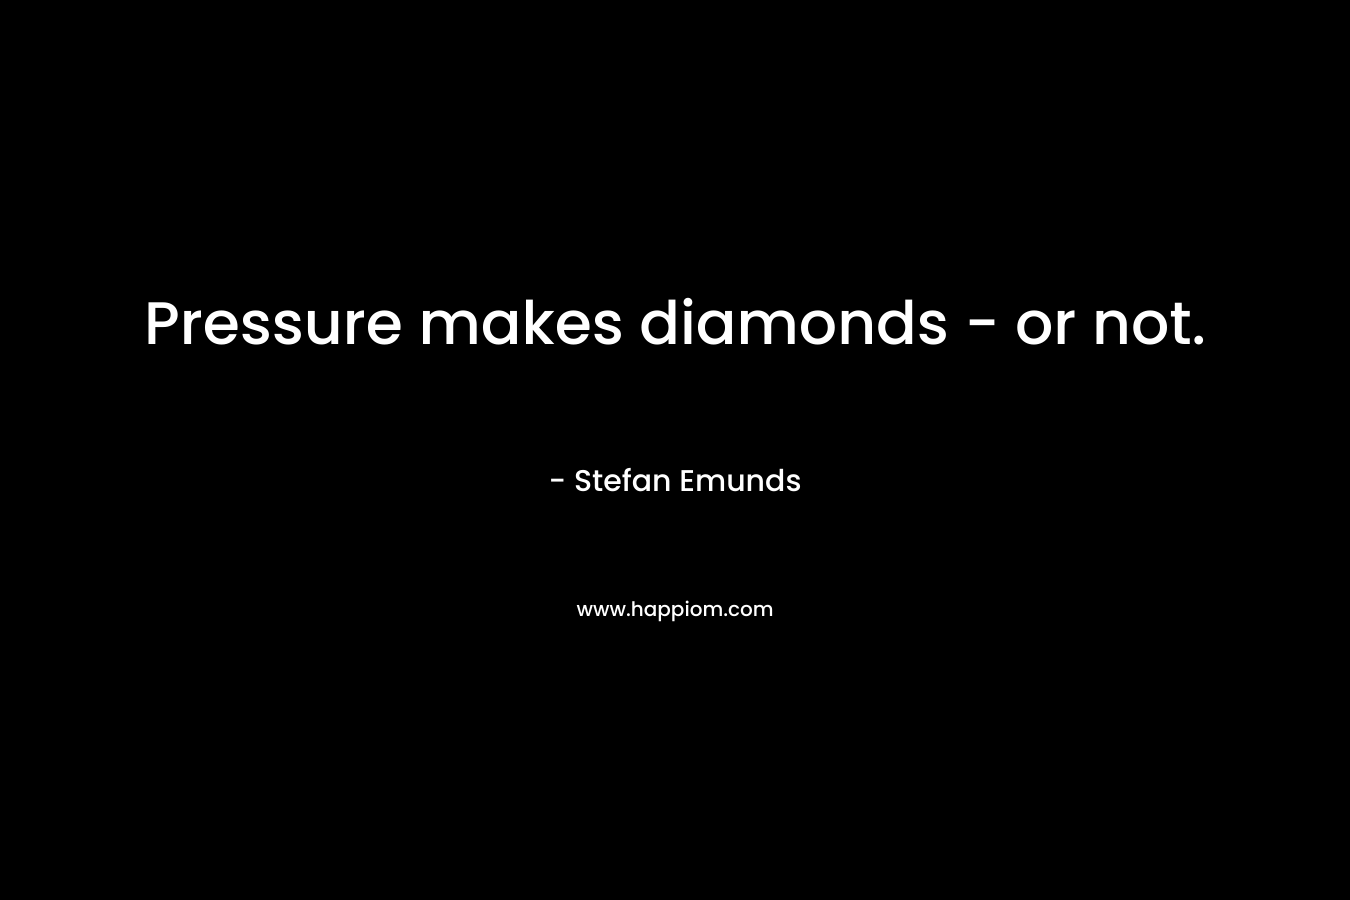 Pressure makes diamonds - or not.